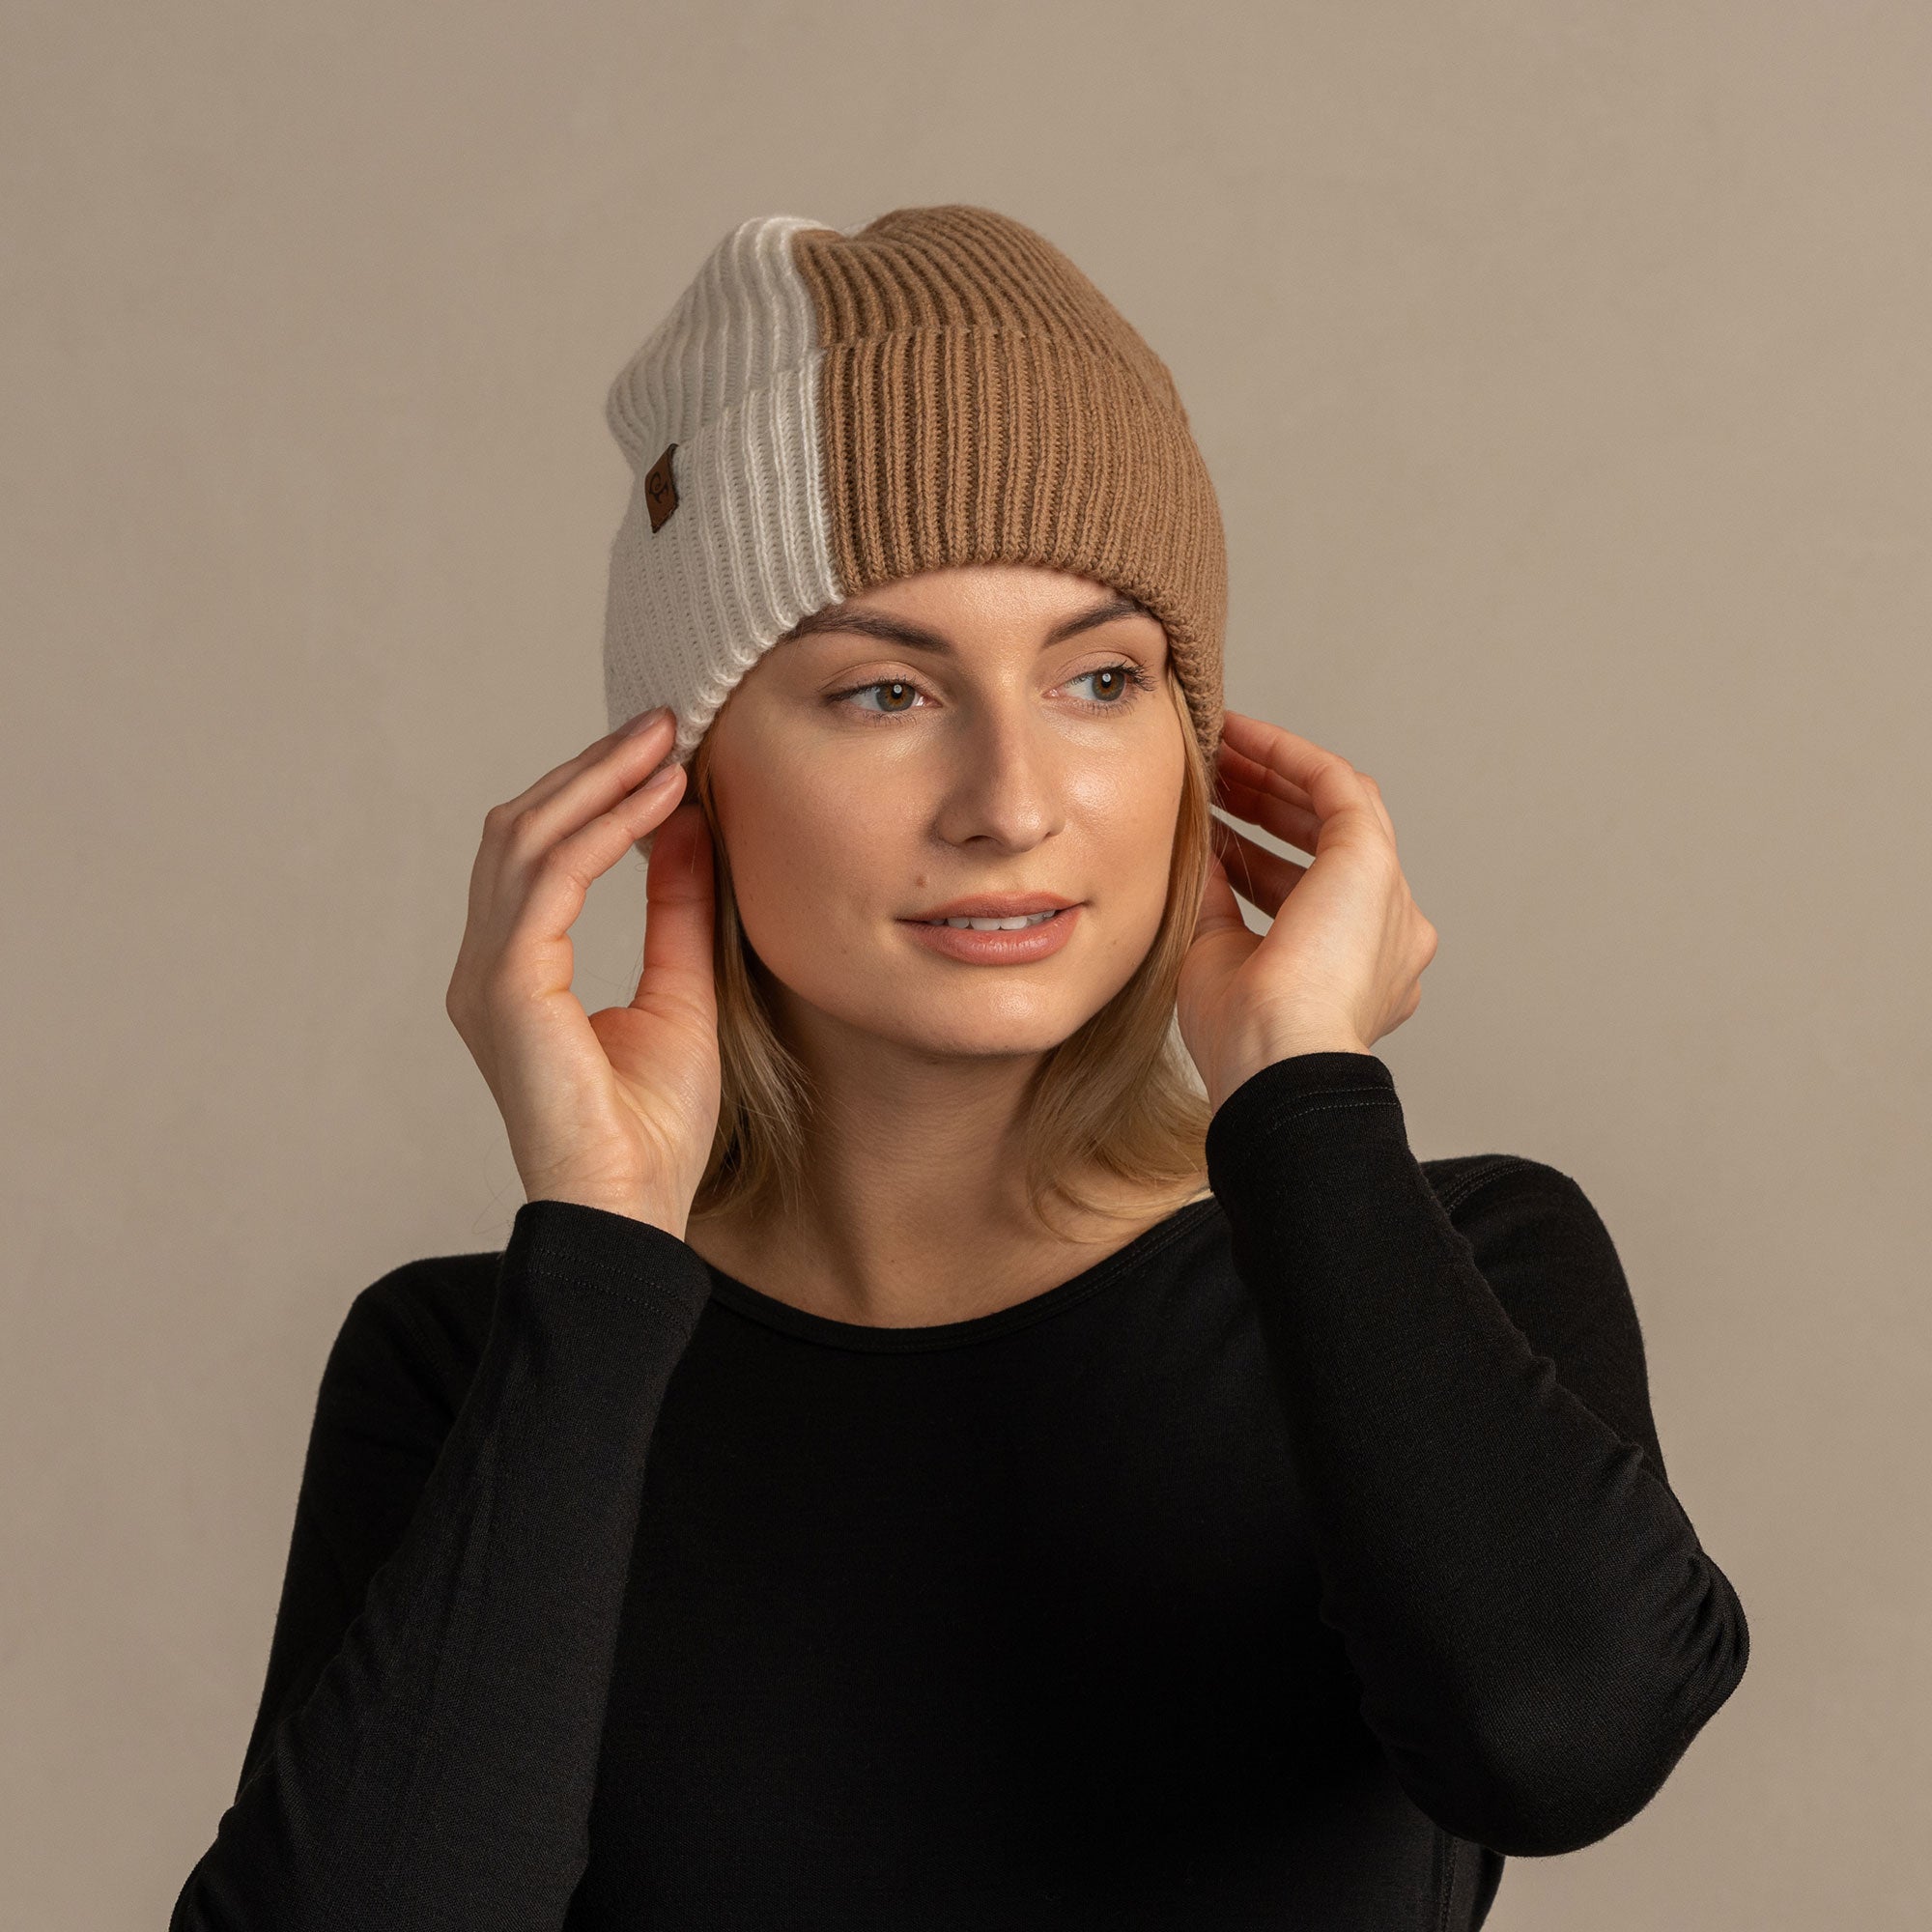 KastKing Winter Beanie Hats for Men & Women-Leisure Knit Ribbed